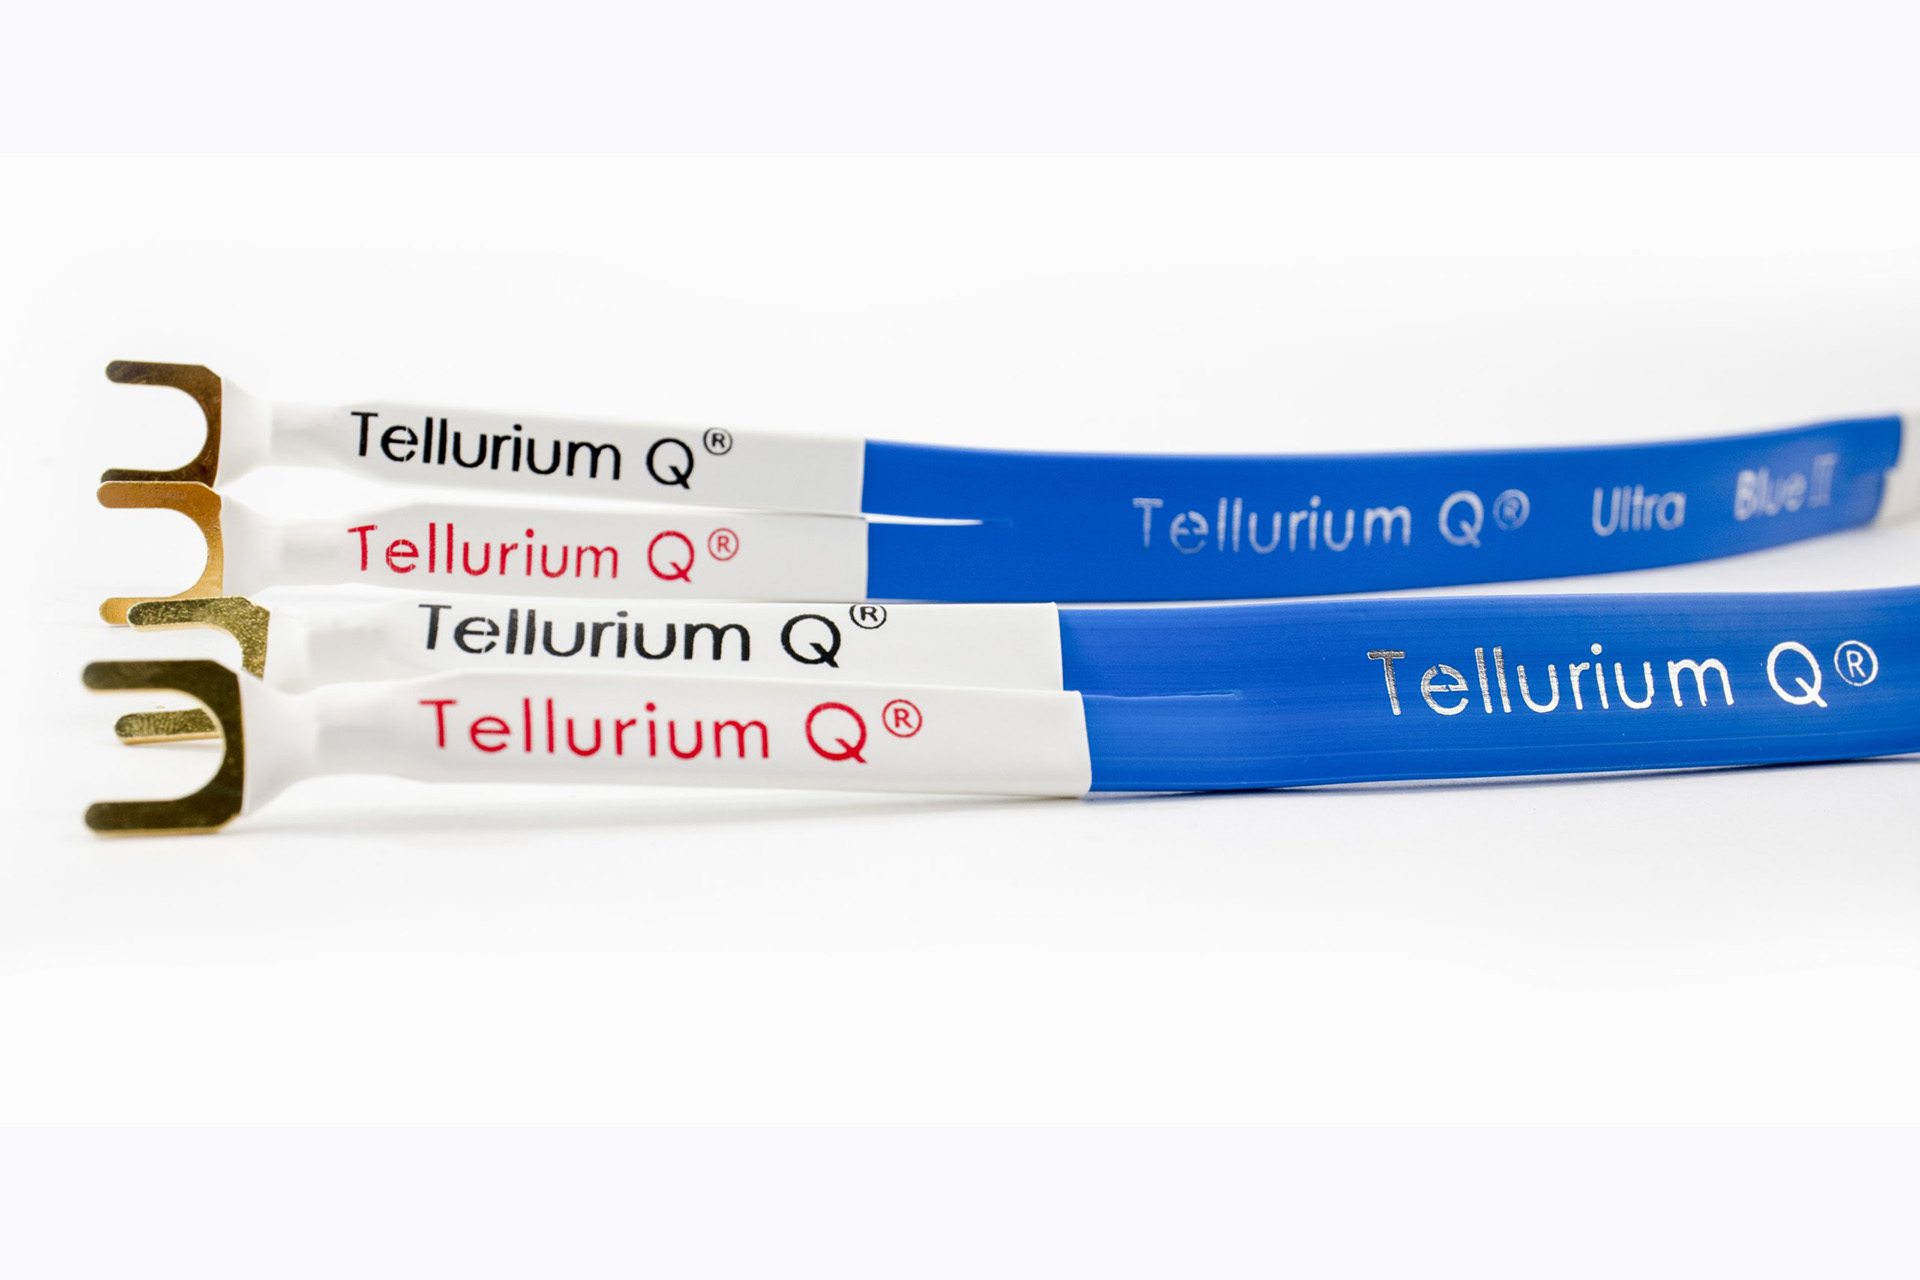 Tellurium Q | Ultra Blue II | Jumper 